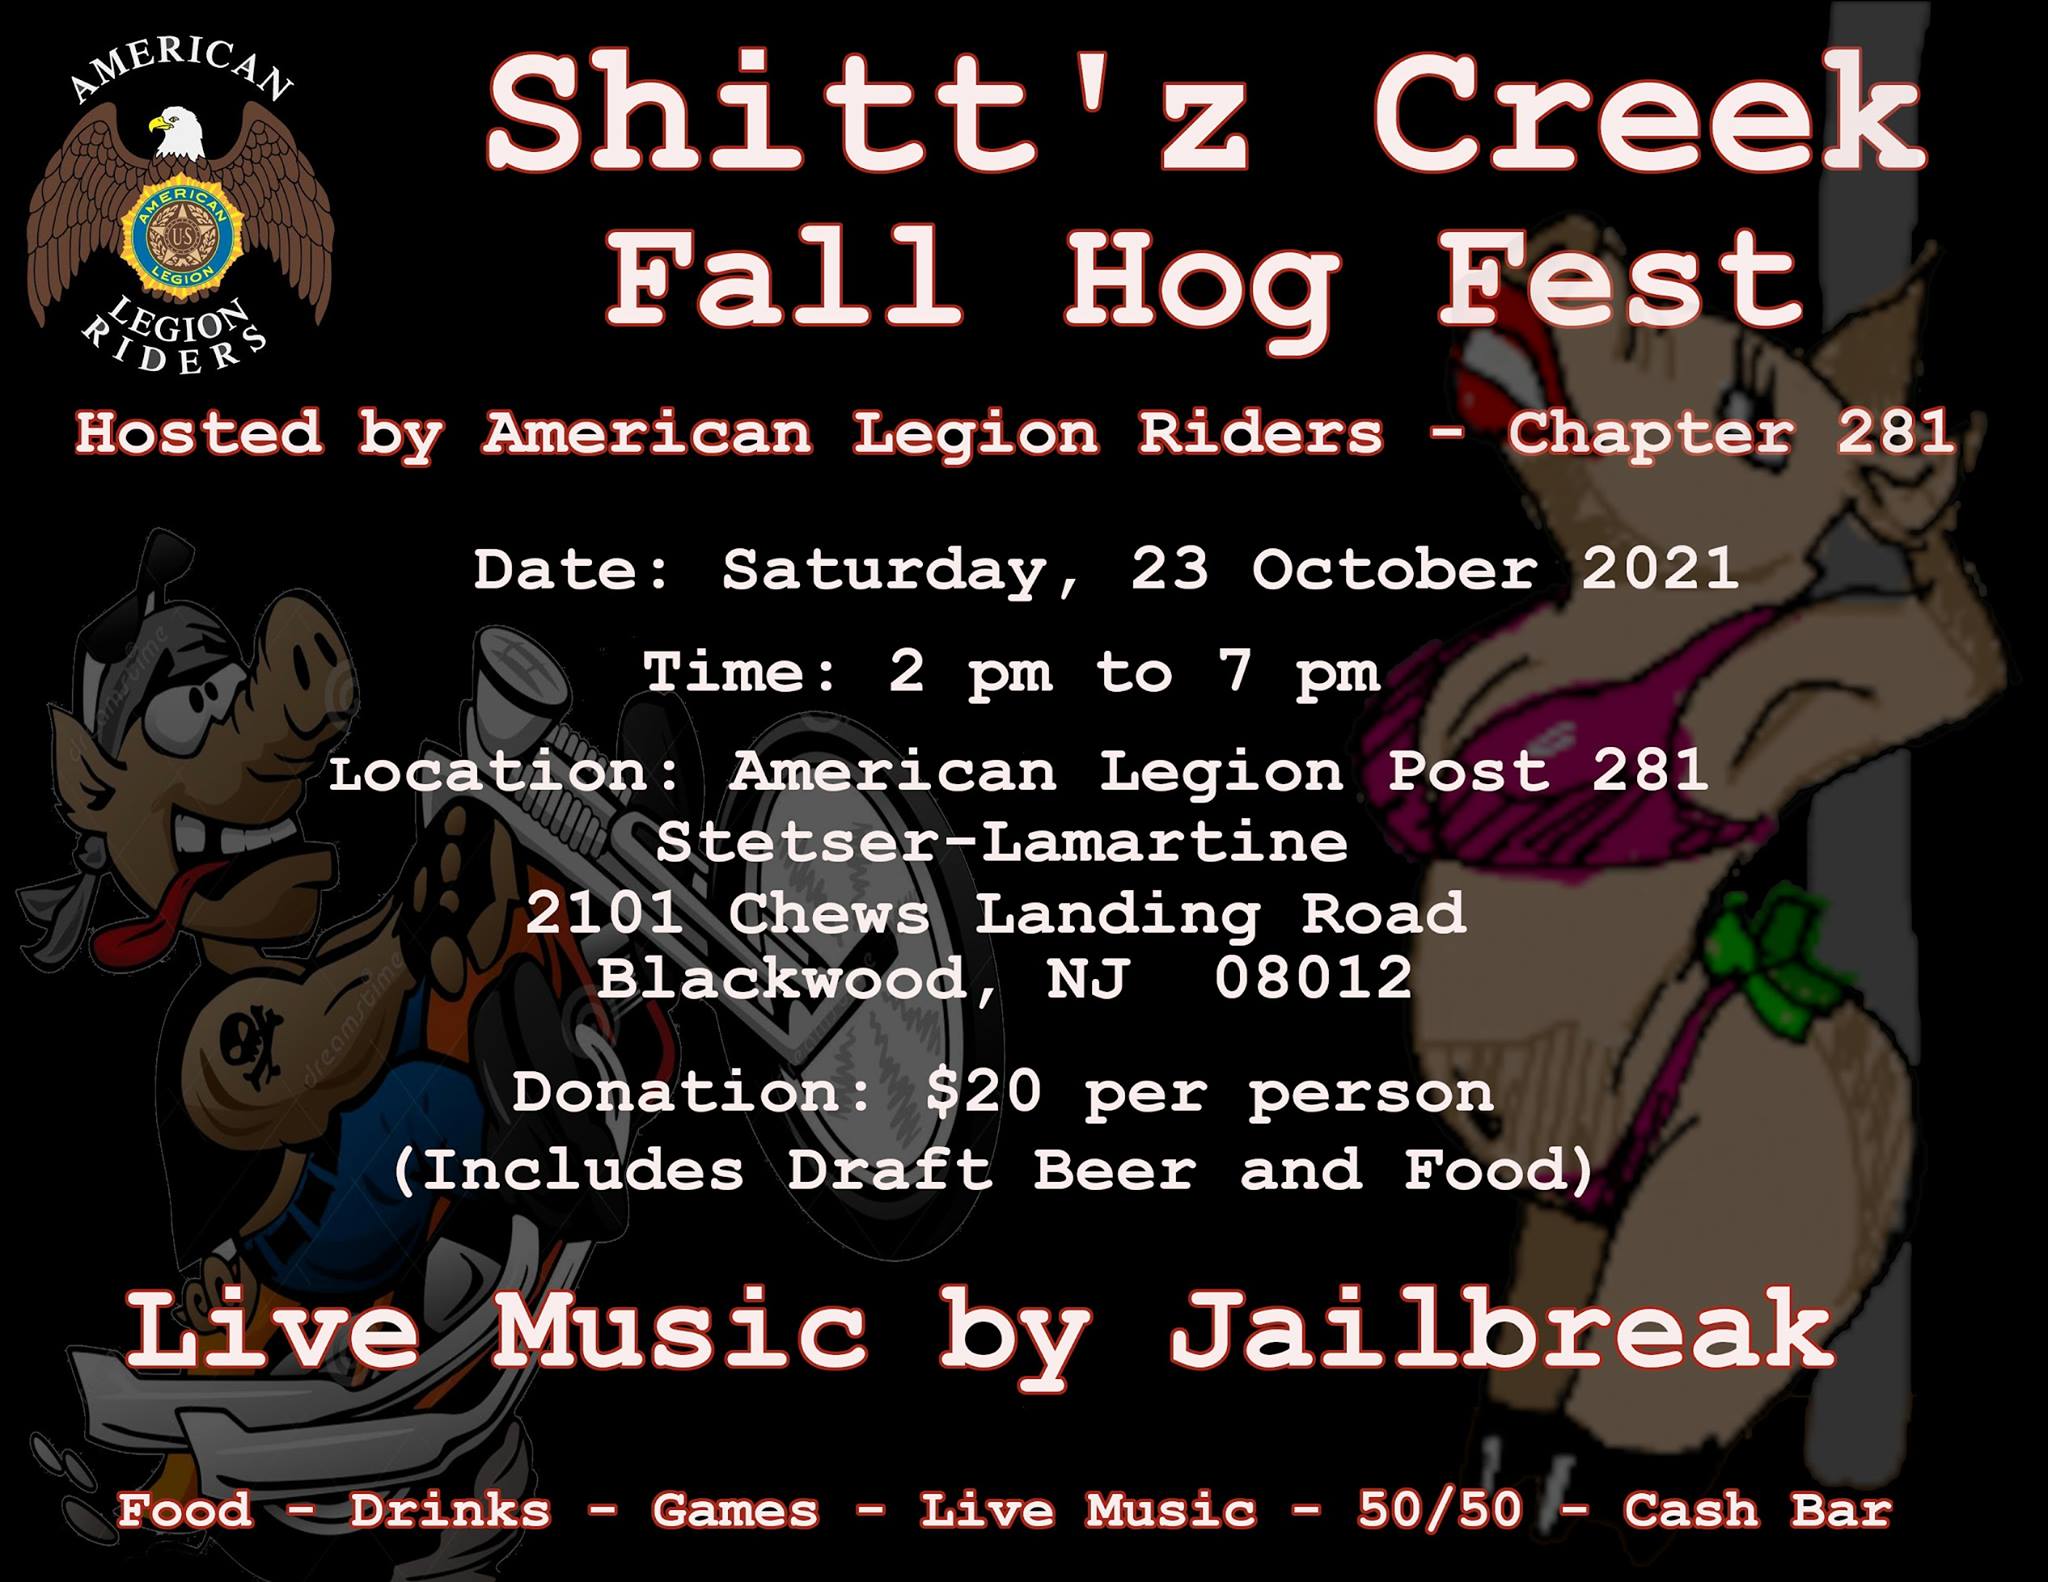 Shittz Creek Fall Hog Fest